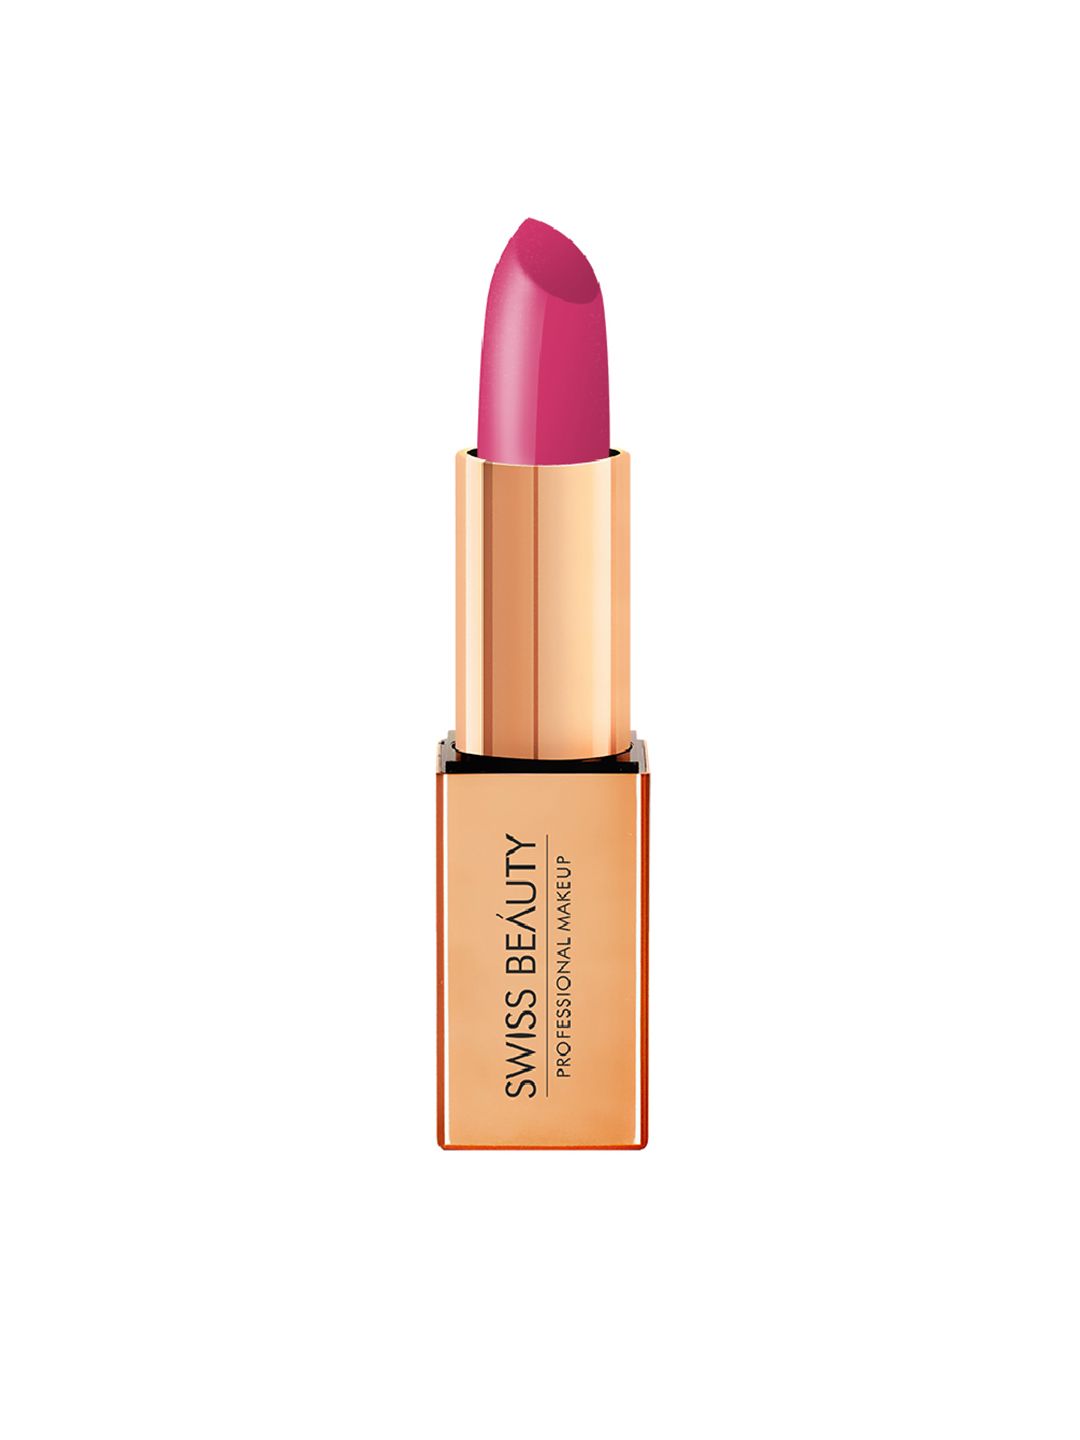 SWISS BEAUTY Silk Matte Lipstick- Fuschia Pink 05 Price in India